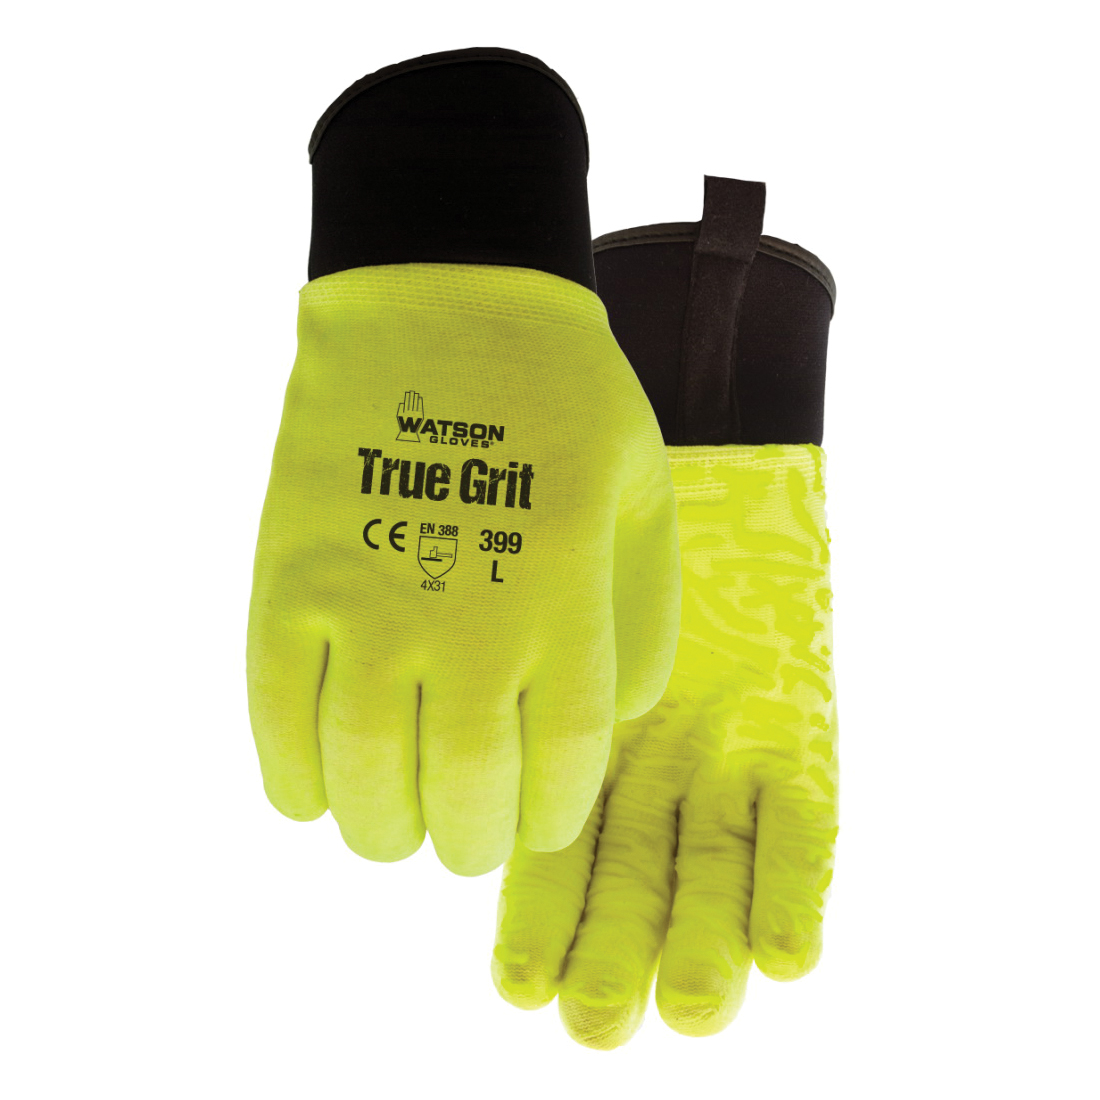 Heated Gloves - Watson Gloves